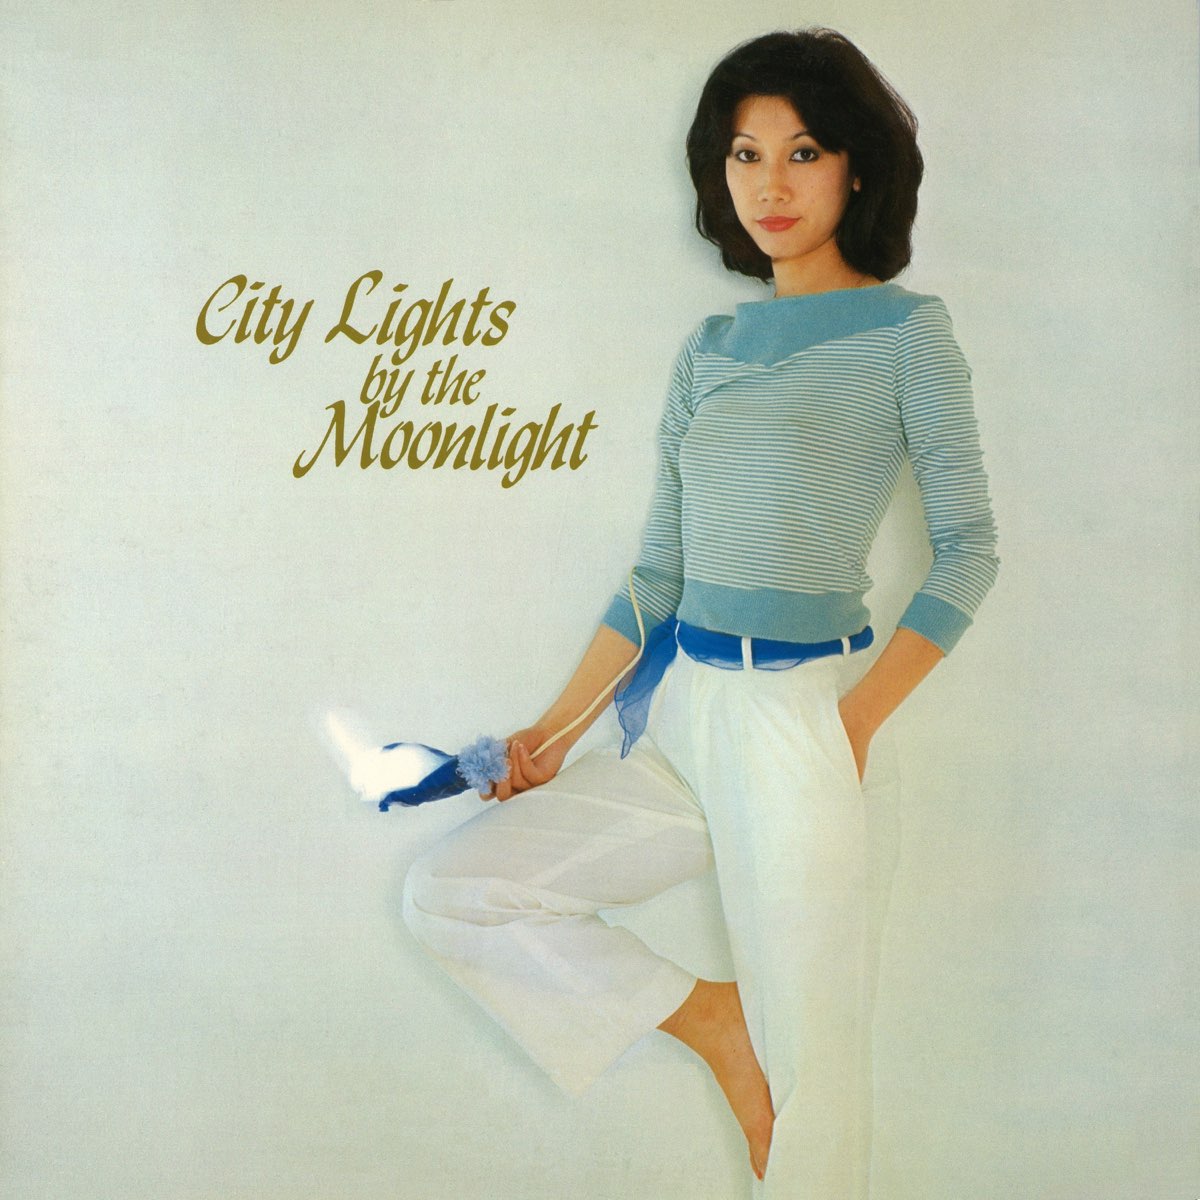 City Lights by the Moonlight - Album by 惣領 智子 - Apple Music